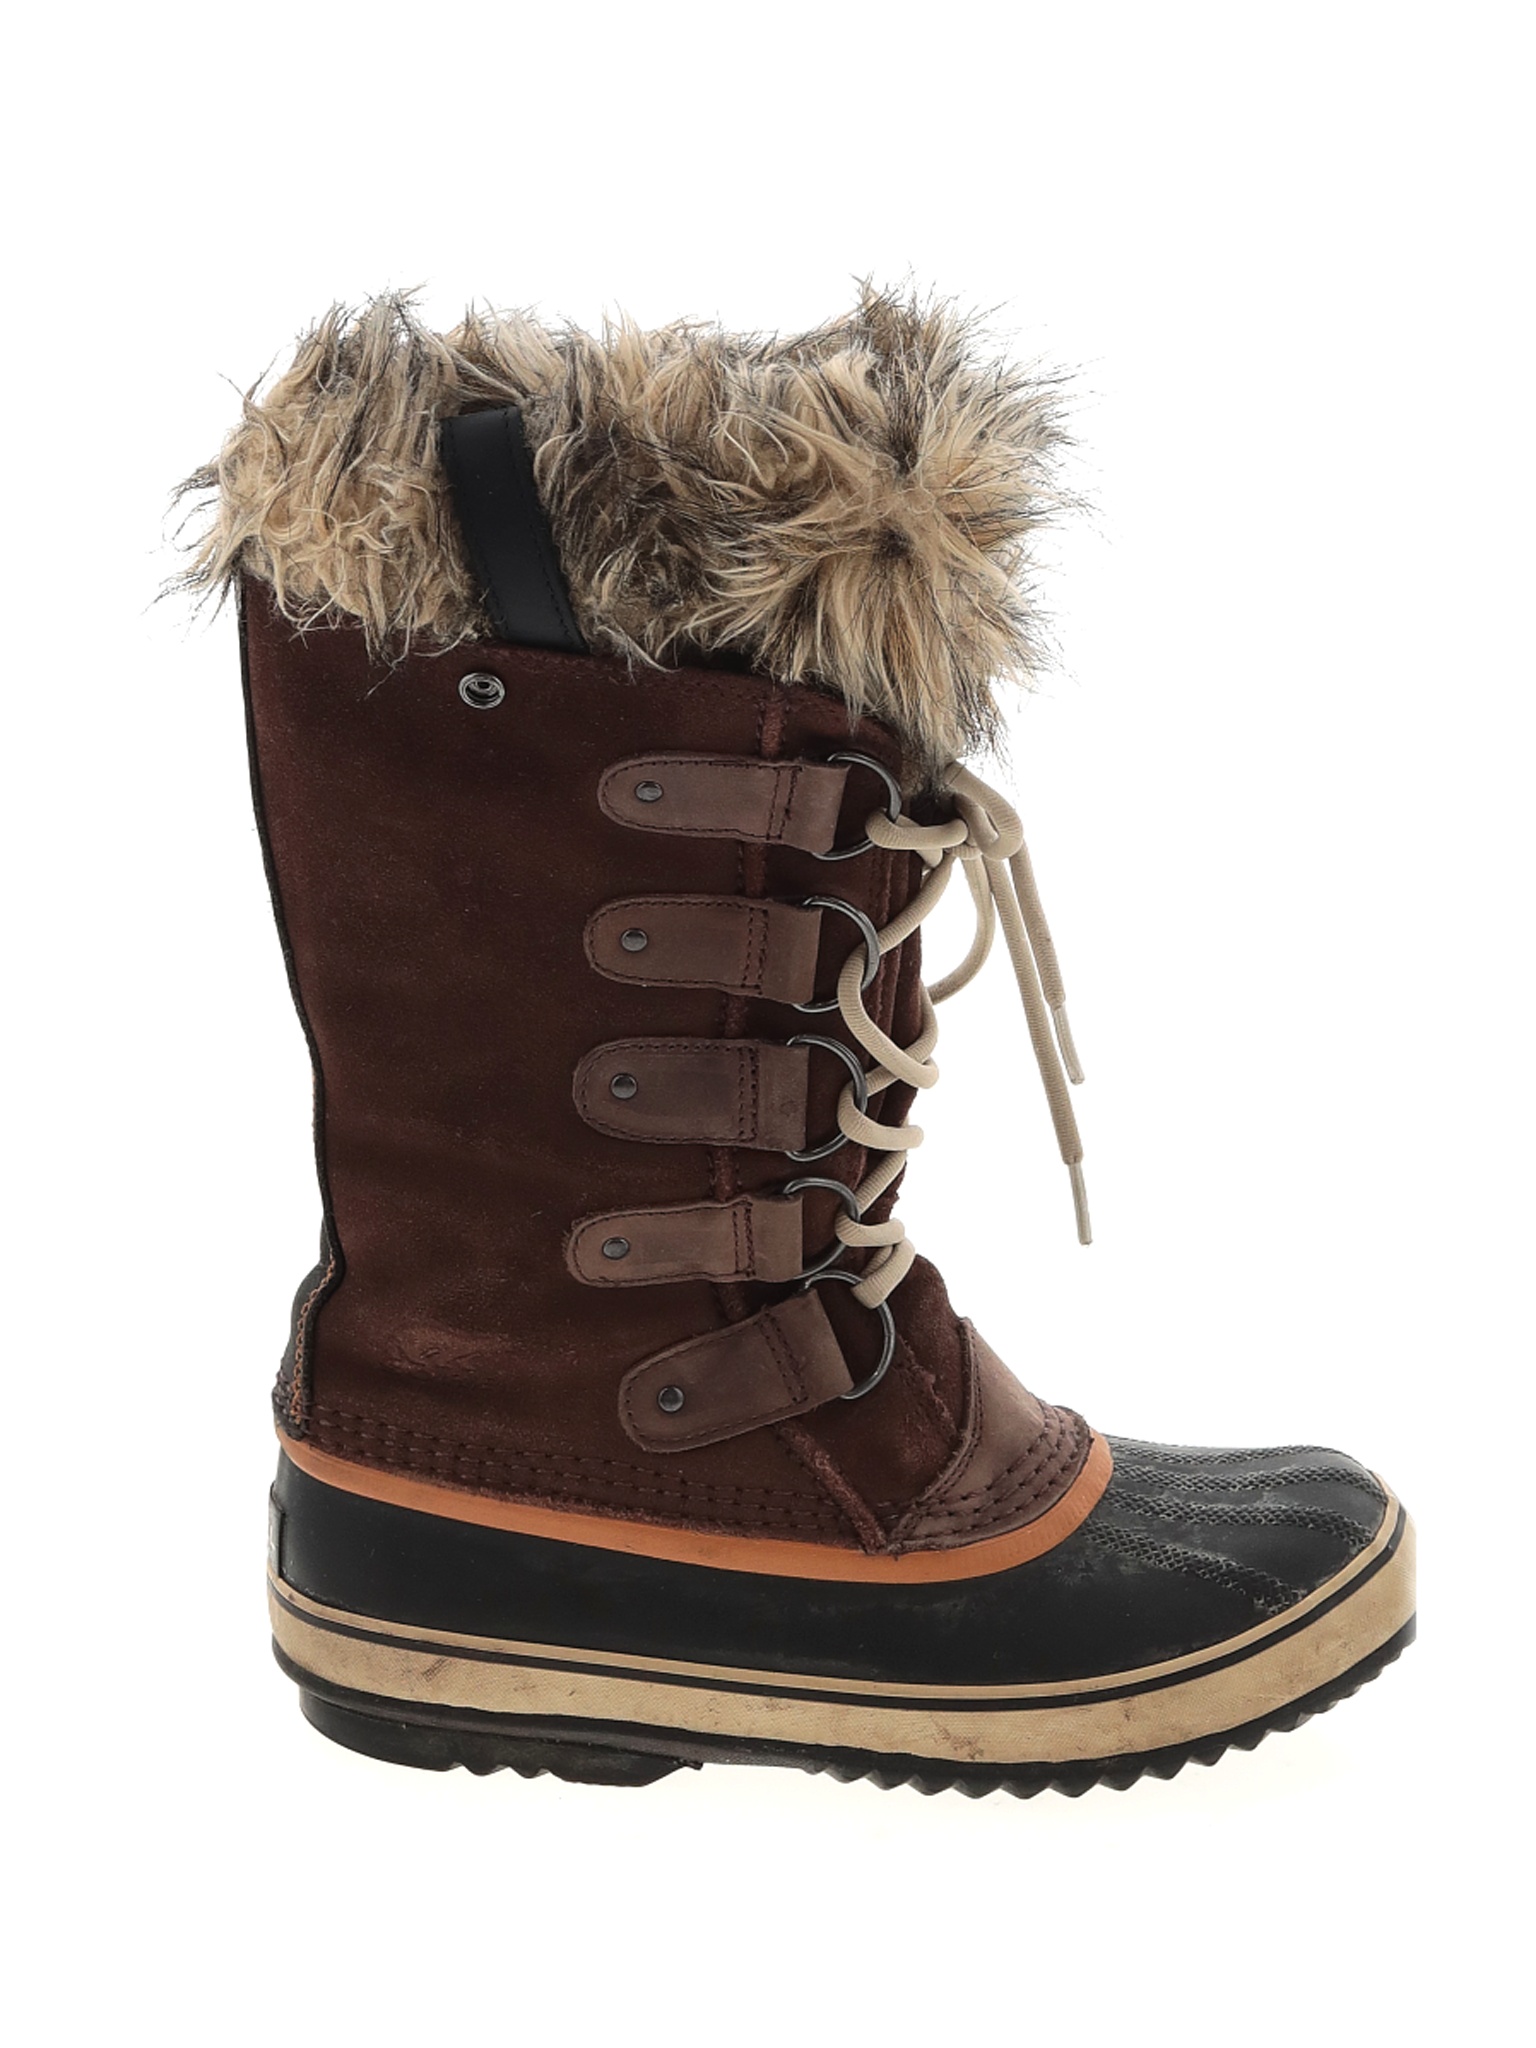 Sorel Women Brown Boots US 8 | eBay